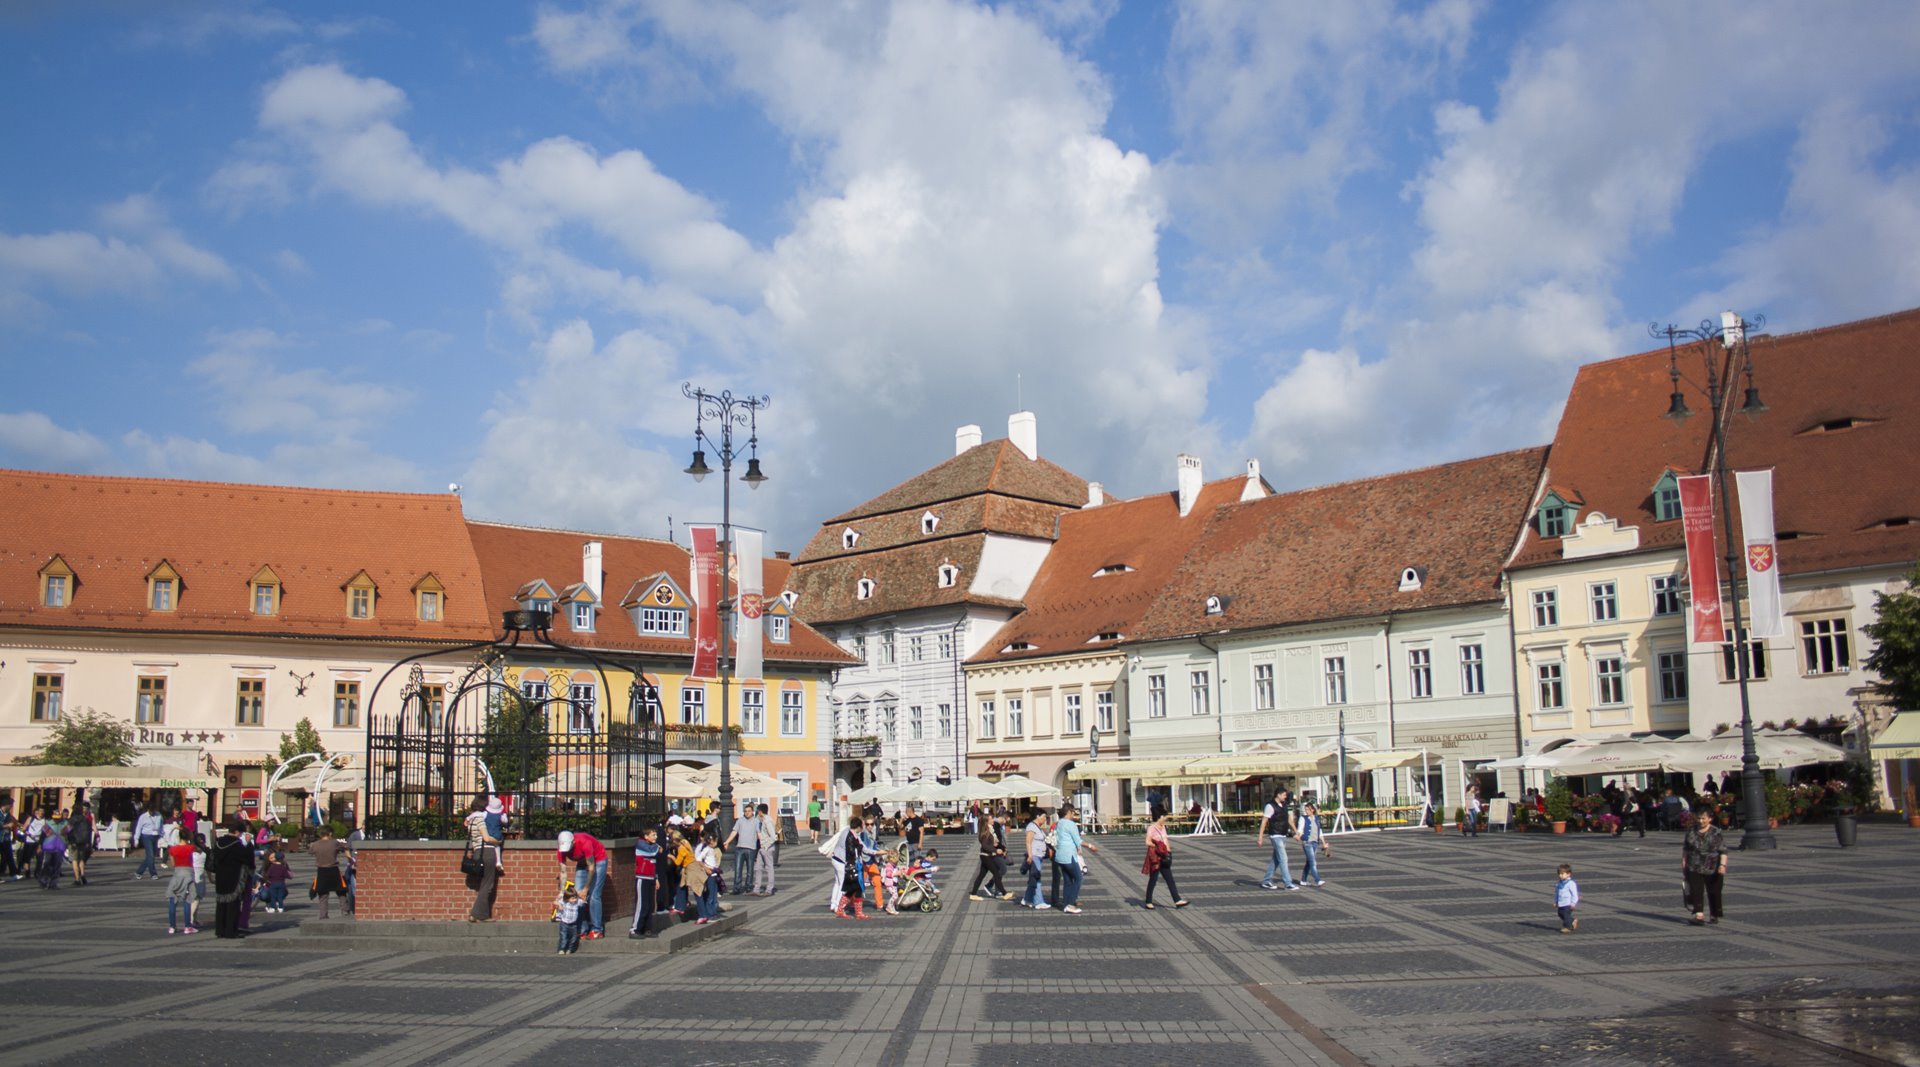 The Main Square in Sibiu